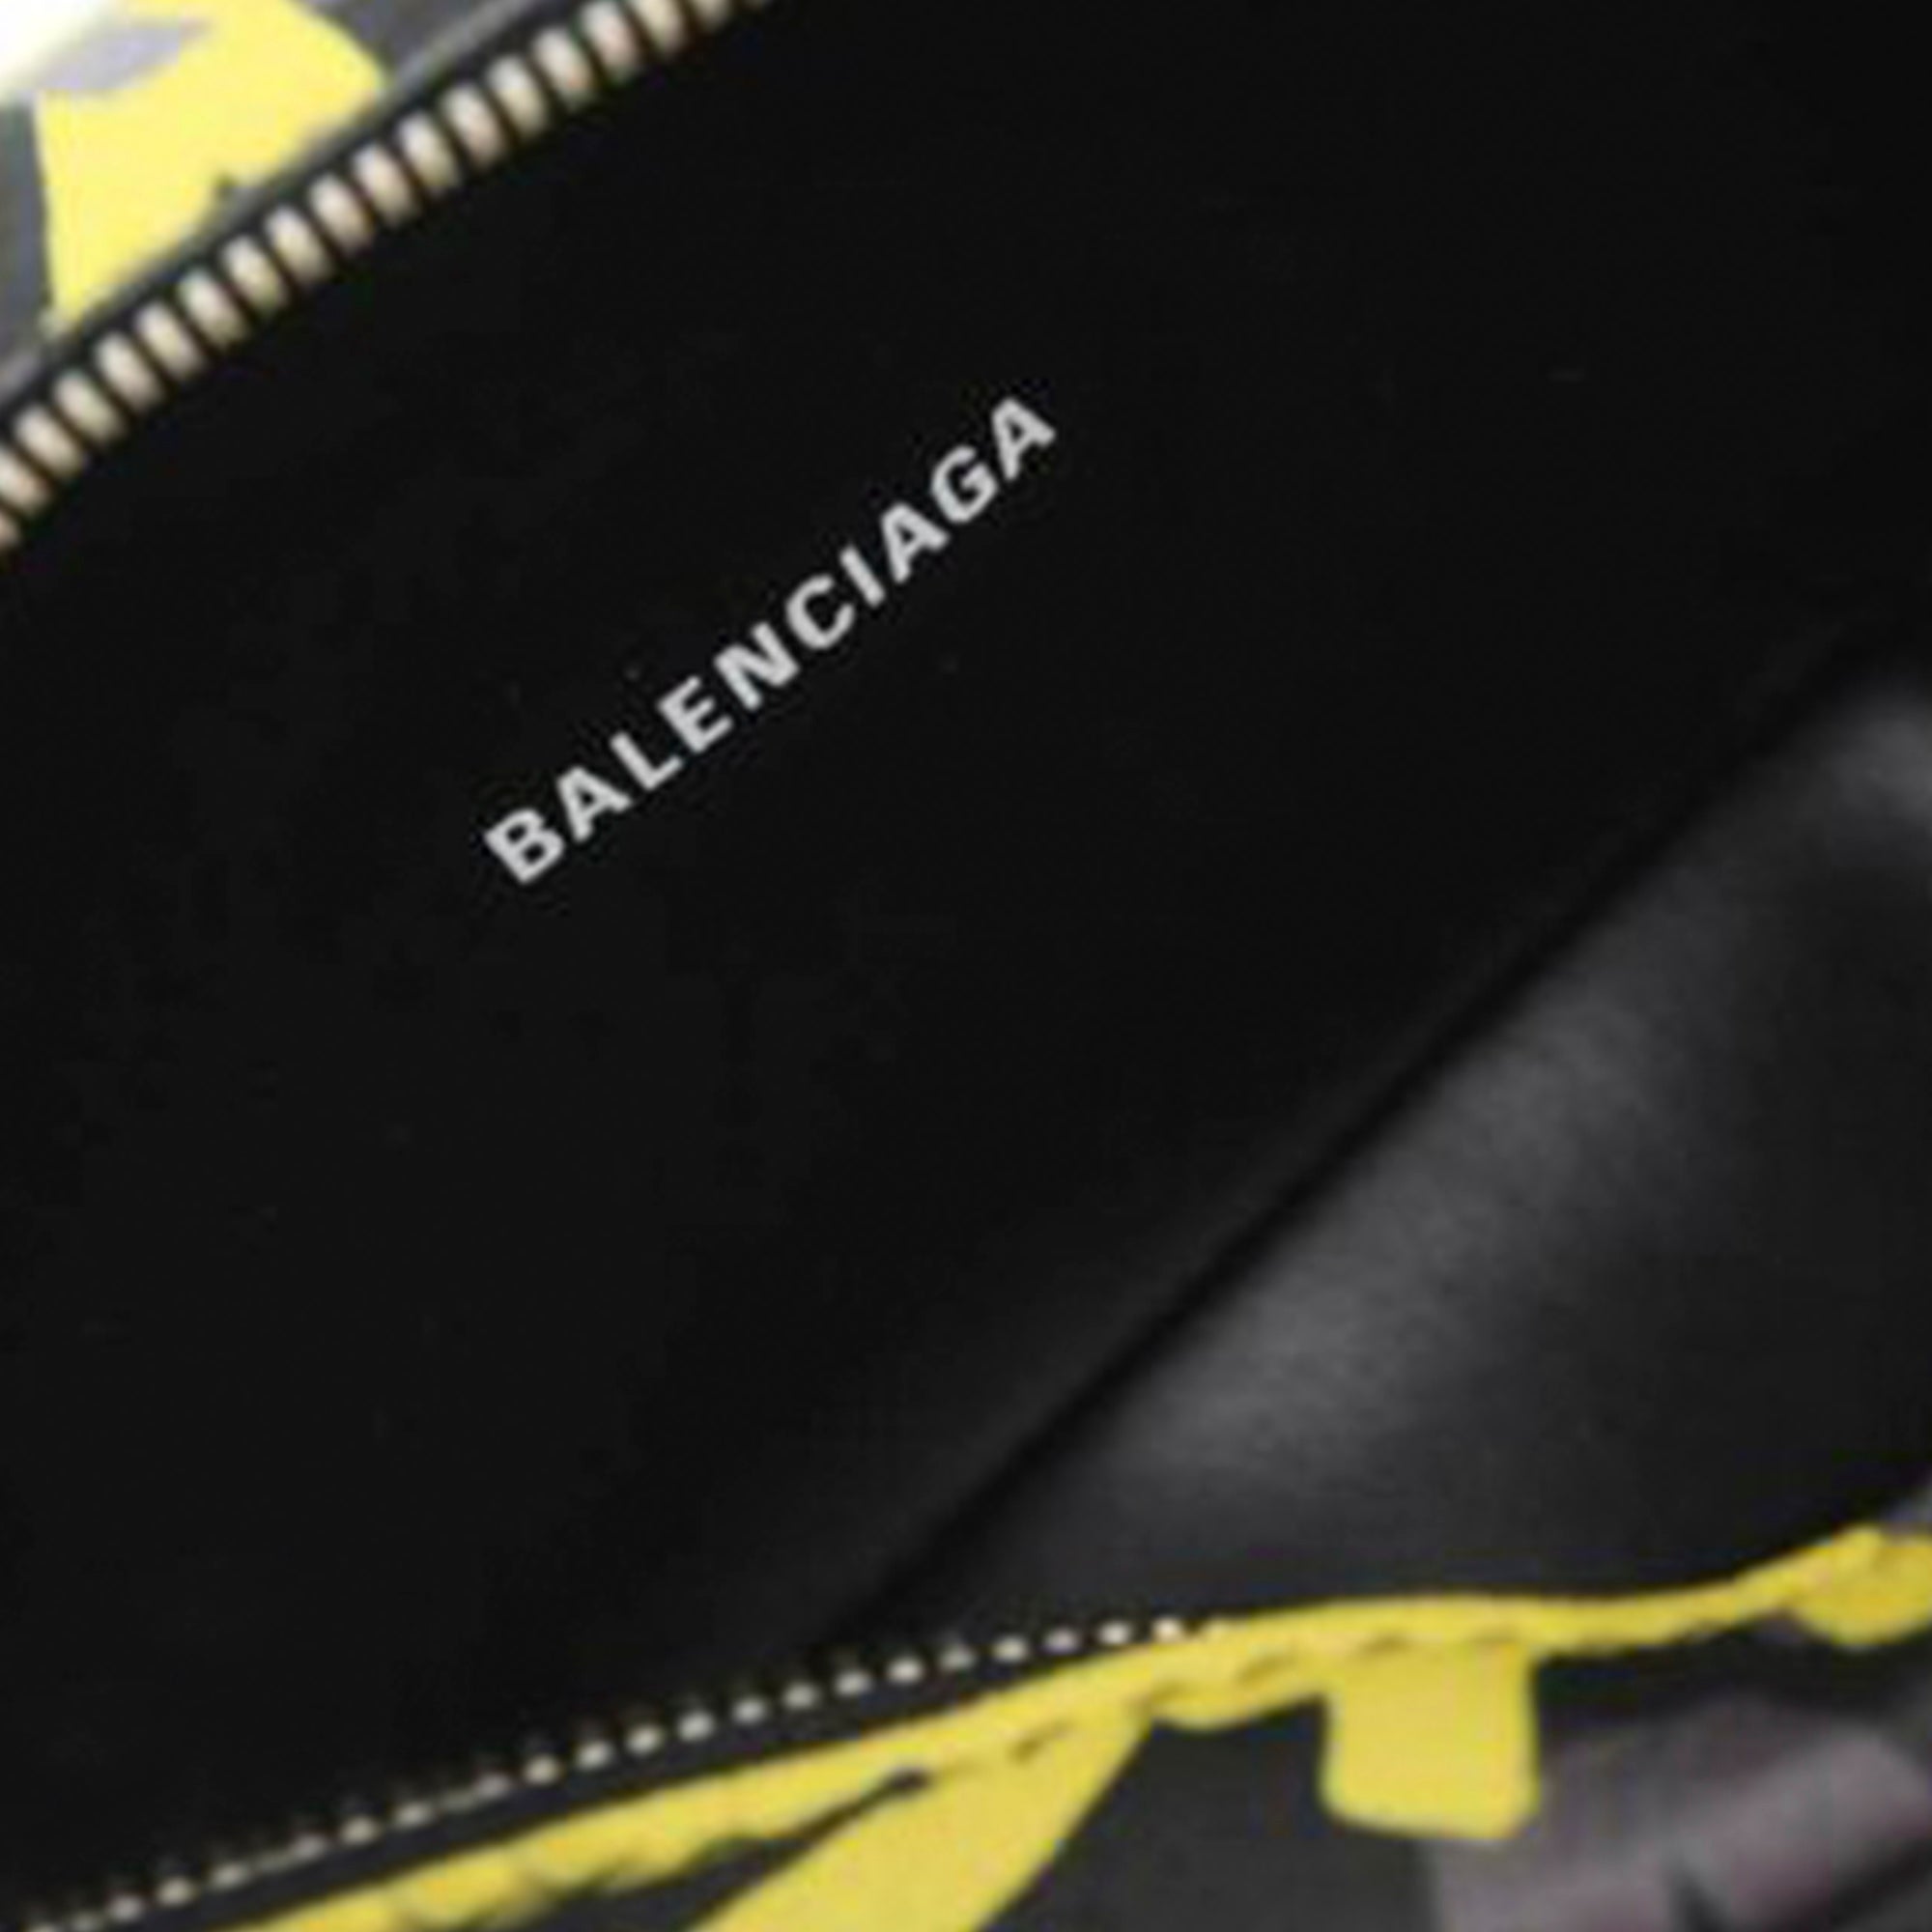 Black Balenciaga Everyday XS Camera Leather Crossbody Bag